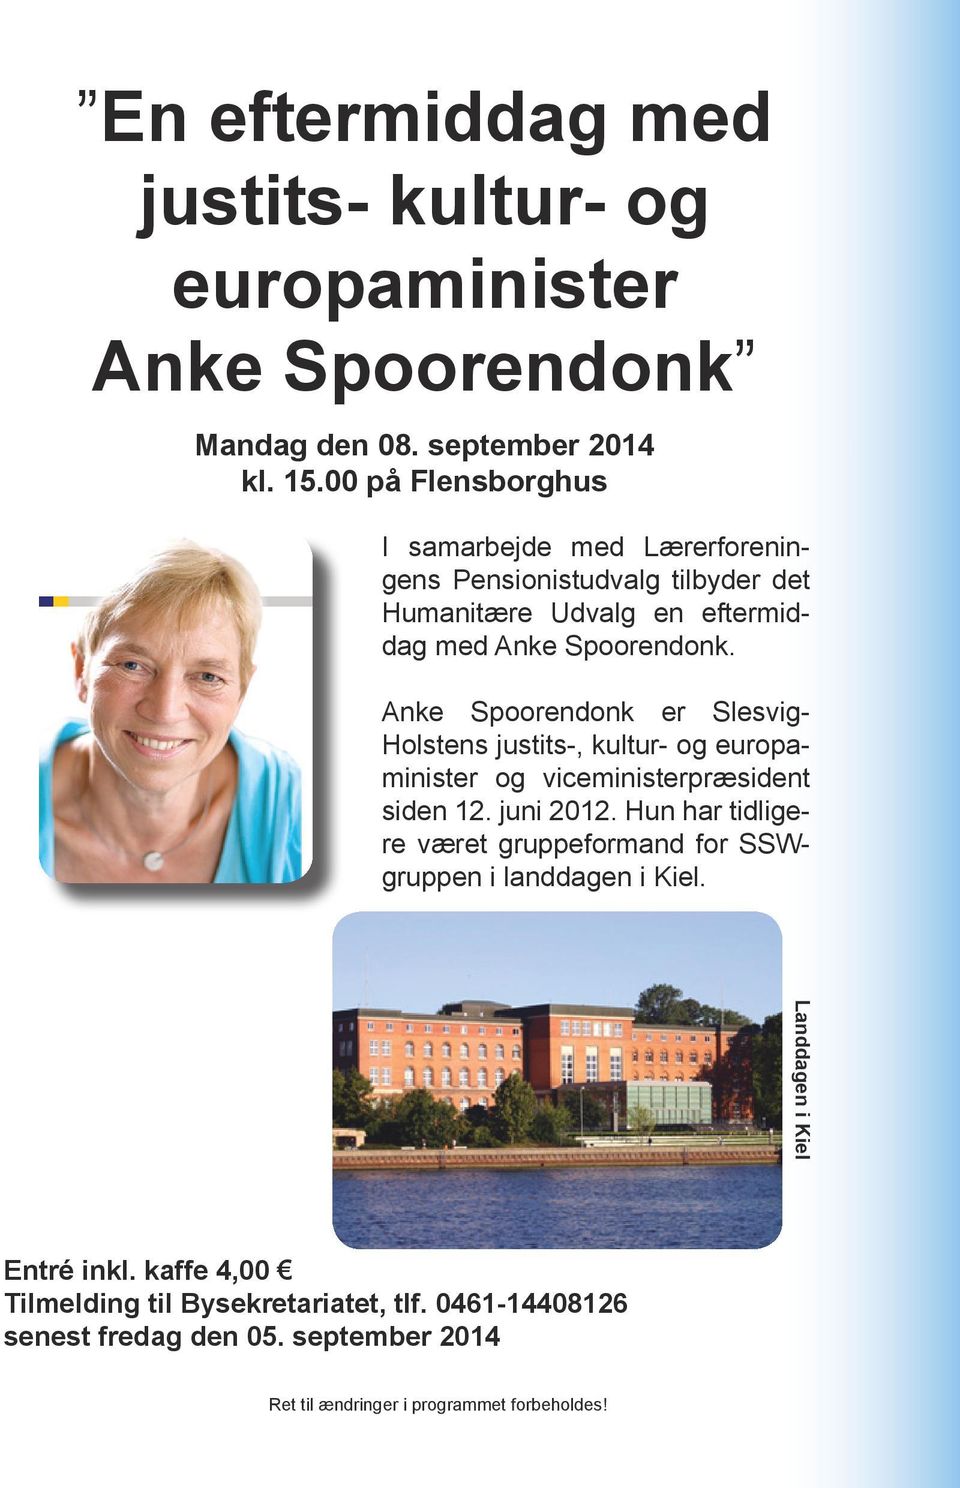 Anke Spoorendonk er Slesvig- Holstens justits-, kultur- og europaminister og viceministerpræsident siden 12. juni 2012.